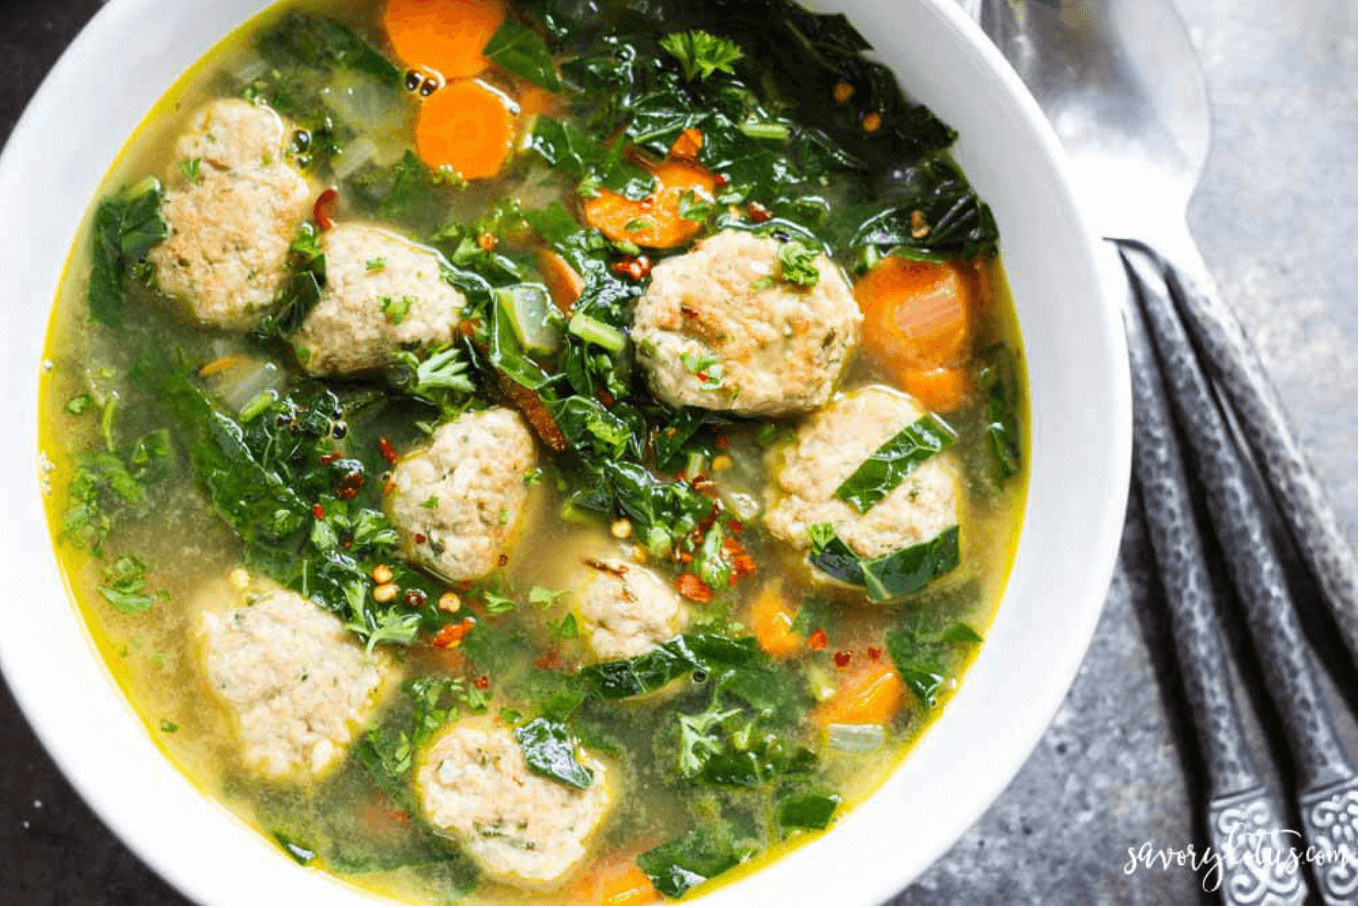 30 Easy Whole30 Soup Recipes | 30 minute turkey meatball soup - savory lotus